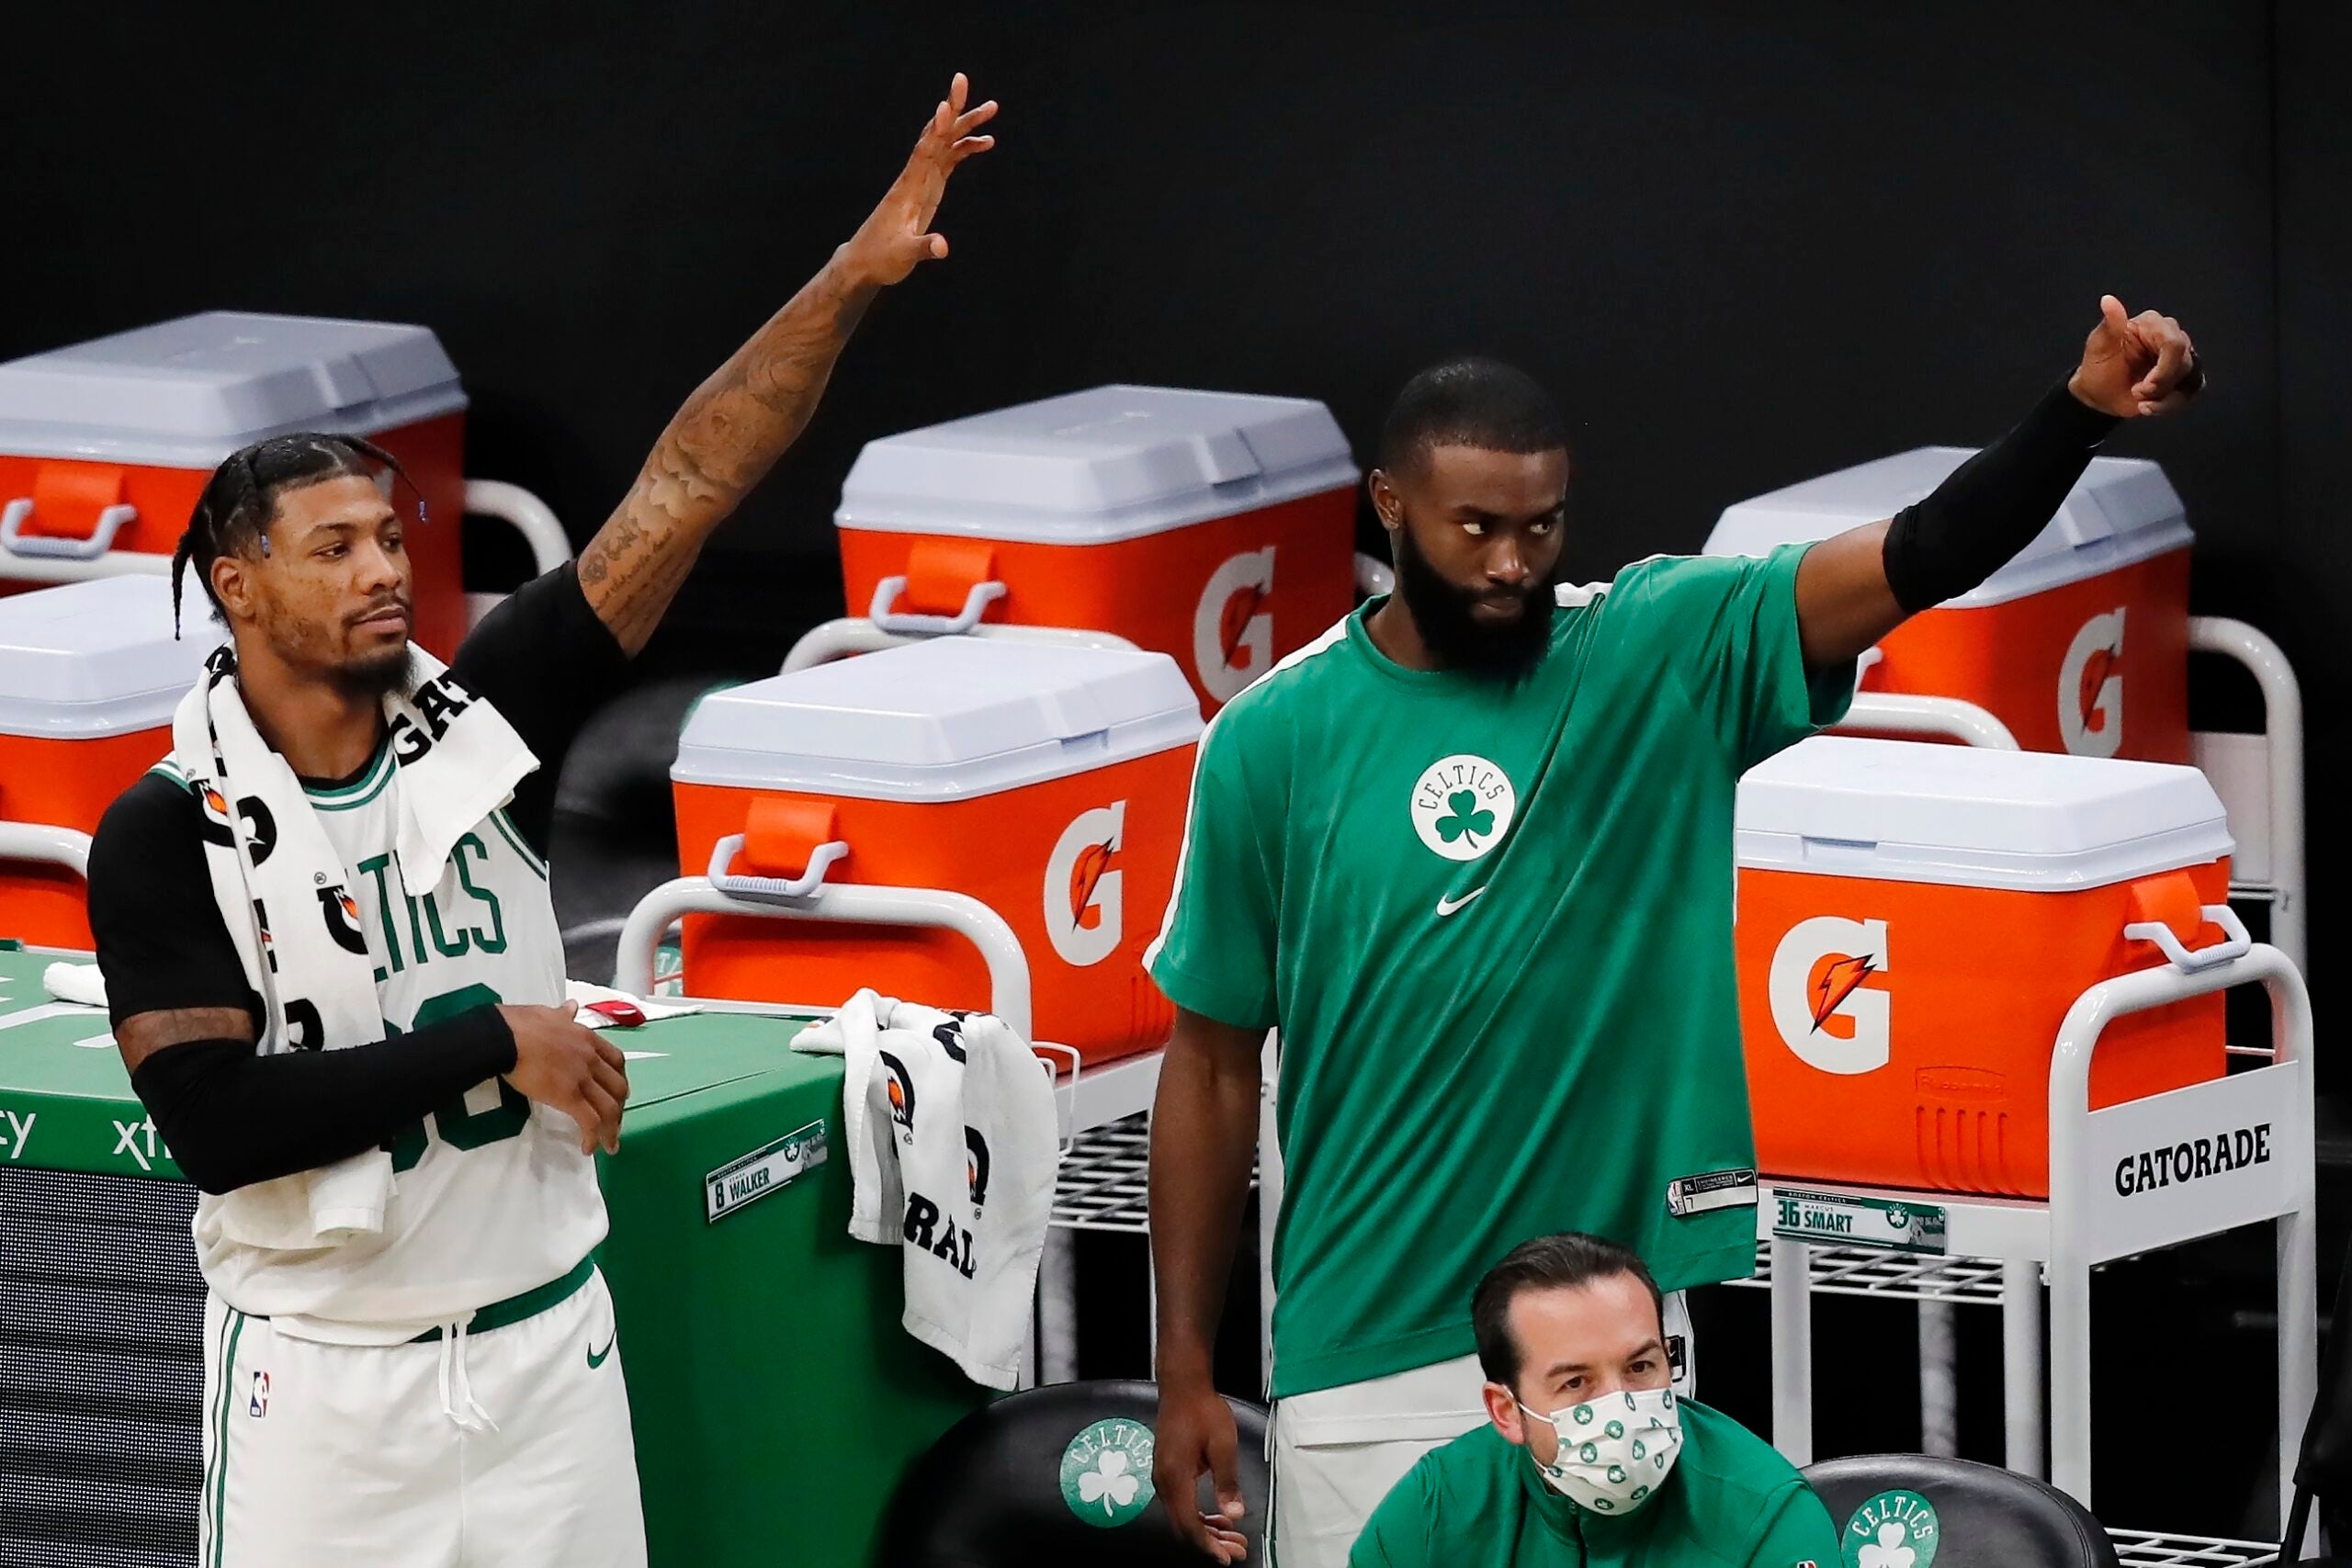 What is No. 24 patch on Celtics' uniforms? Boston modifies jerseys